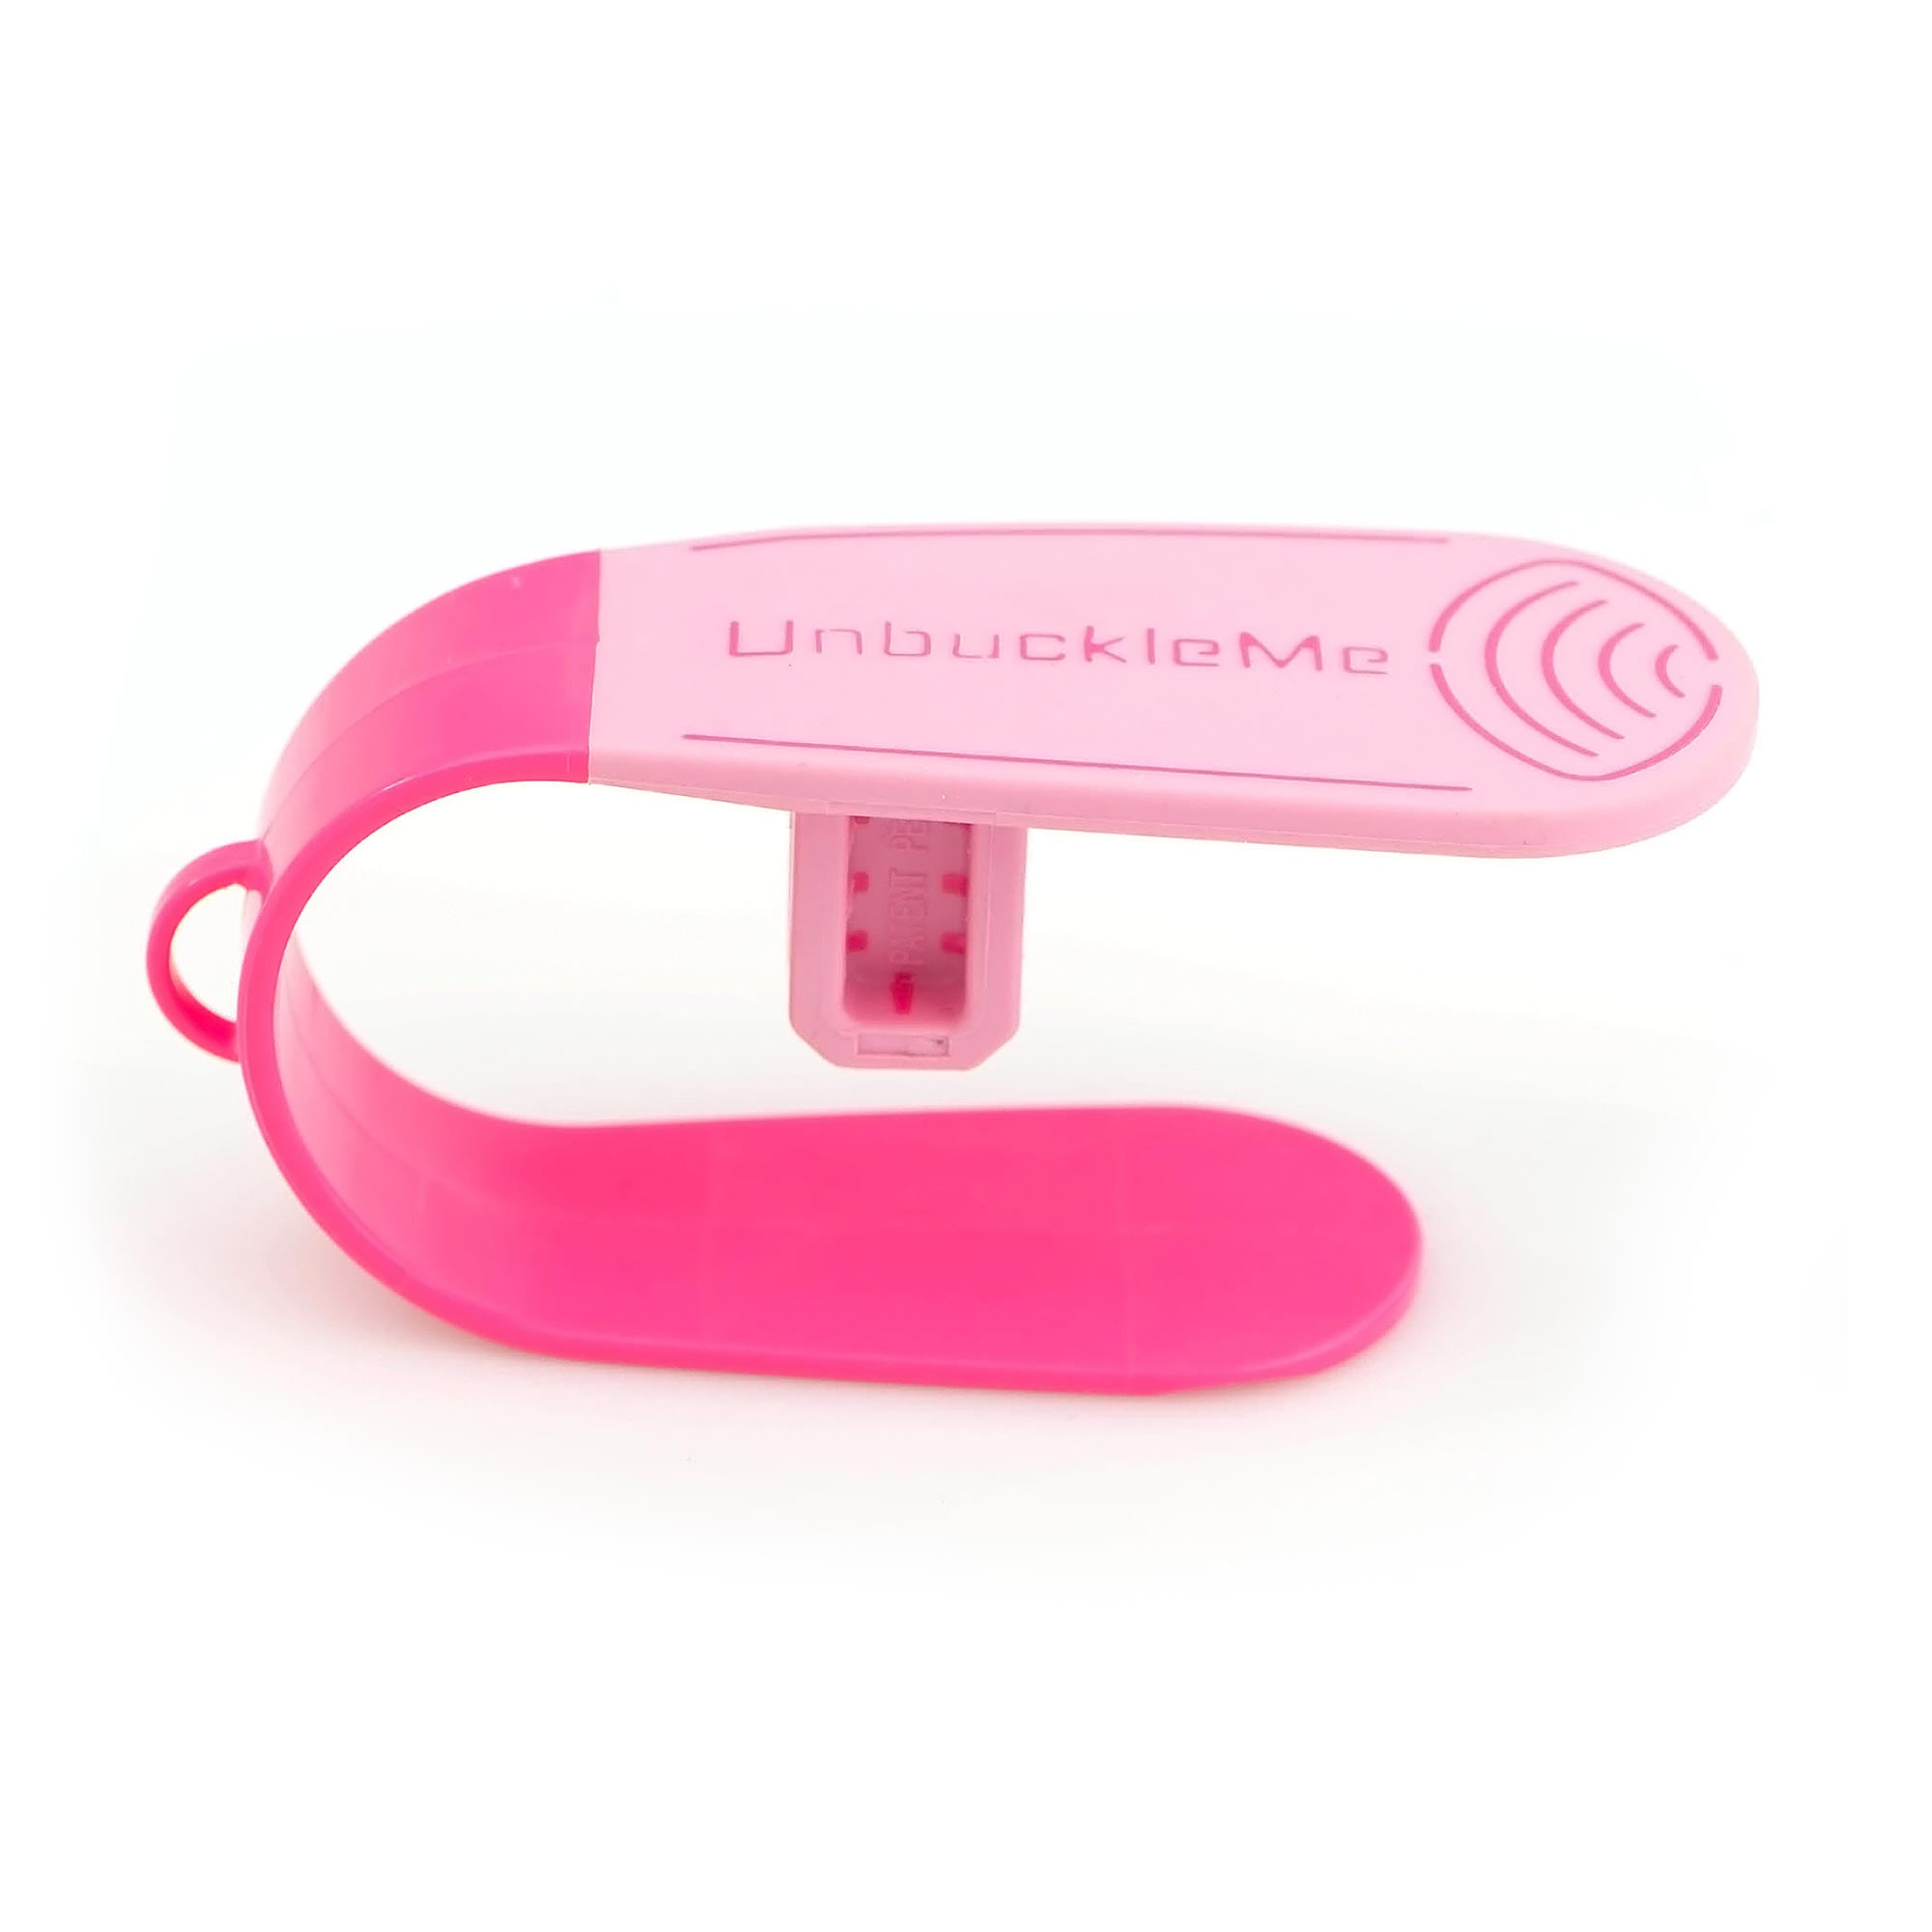 Premium Easy Unbuckle Release D1U1 WeThinkeer Child Car Seat Belt Unbuckler 